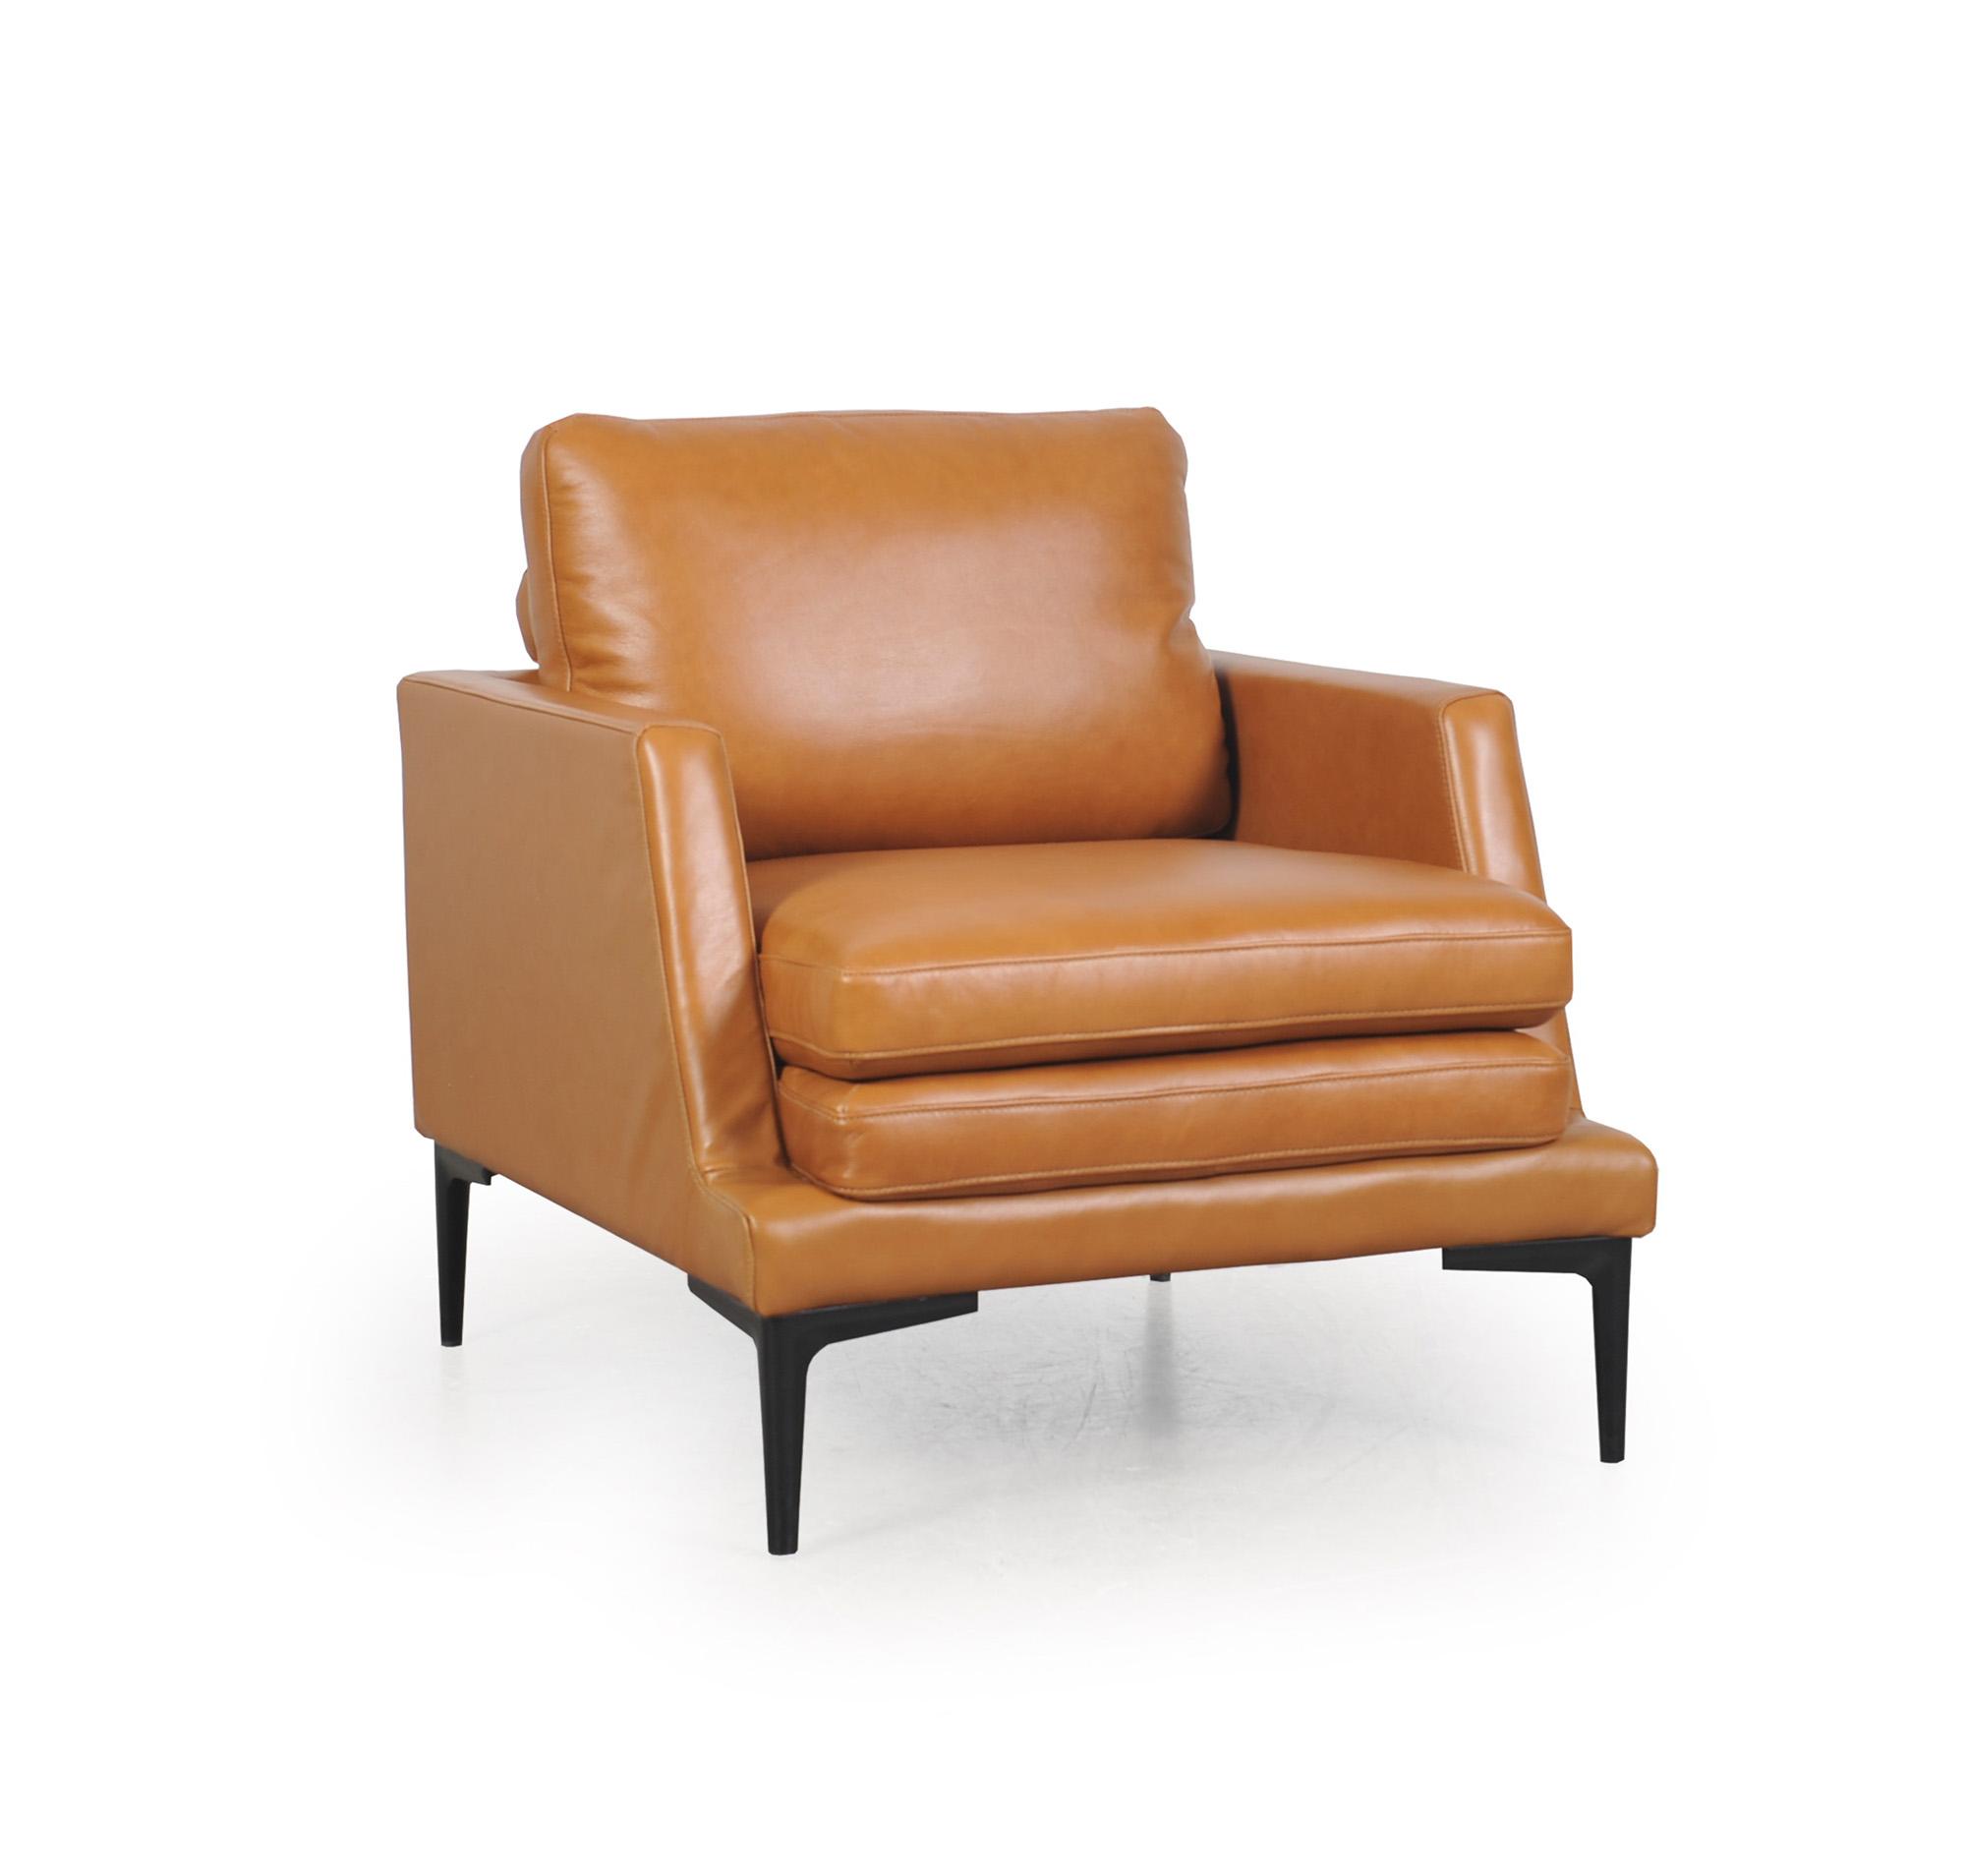 Modern Arm Chairs 439 Rica 43901BS1961 in Tan Top grain leather